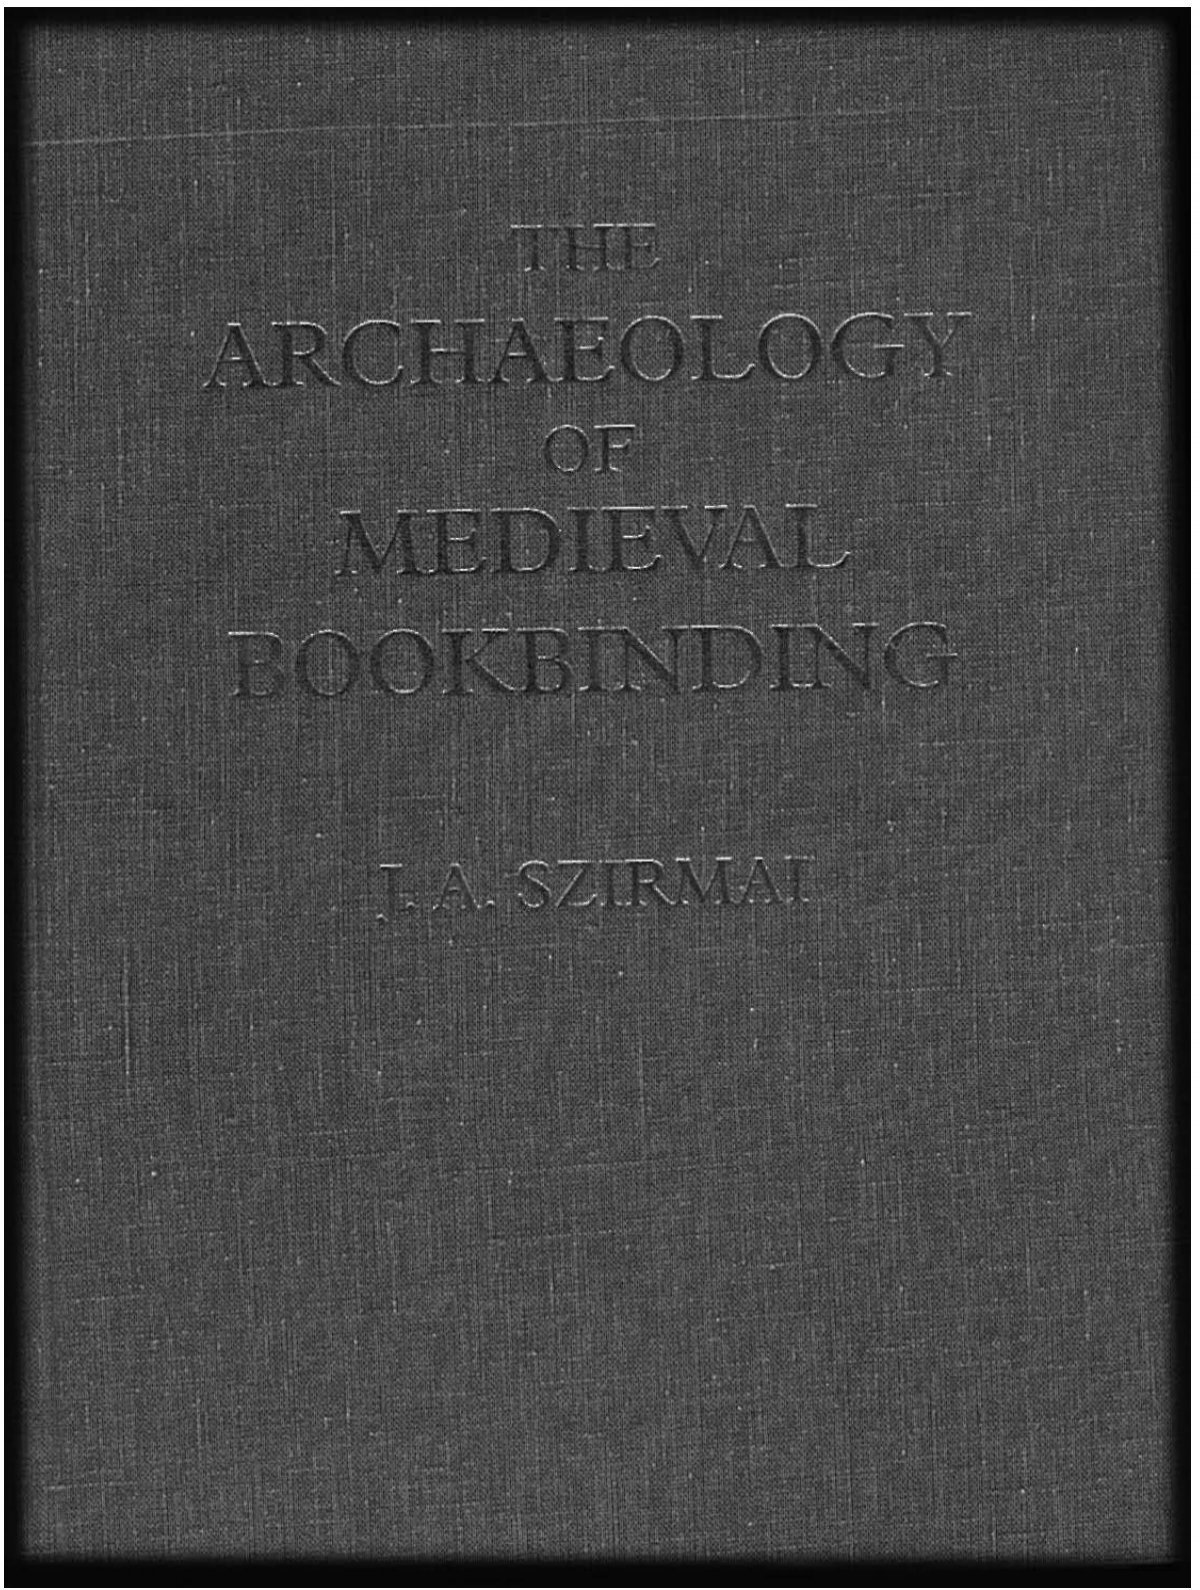 Szirmai, John - The Archaeology of Medieval Bookbinding